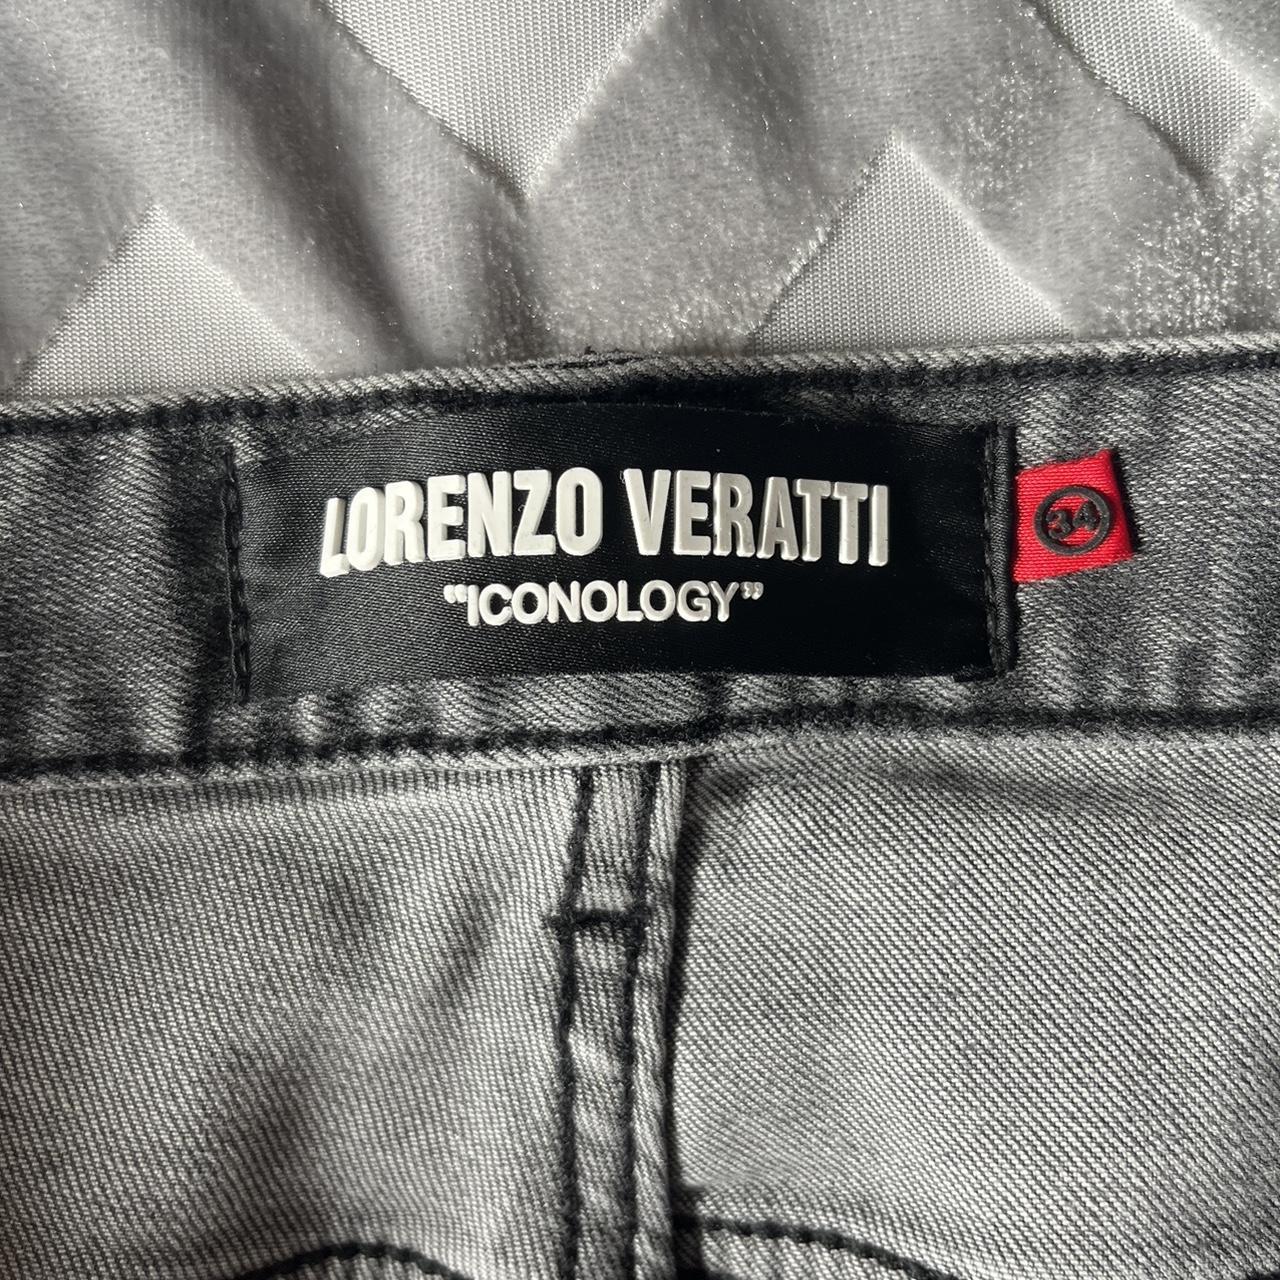 Mens Lorenzo Veratti Jeans. Size 34 #Jeans - Depop